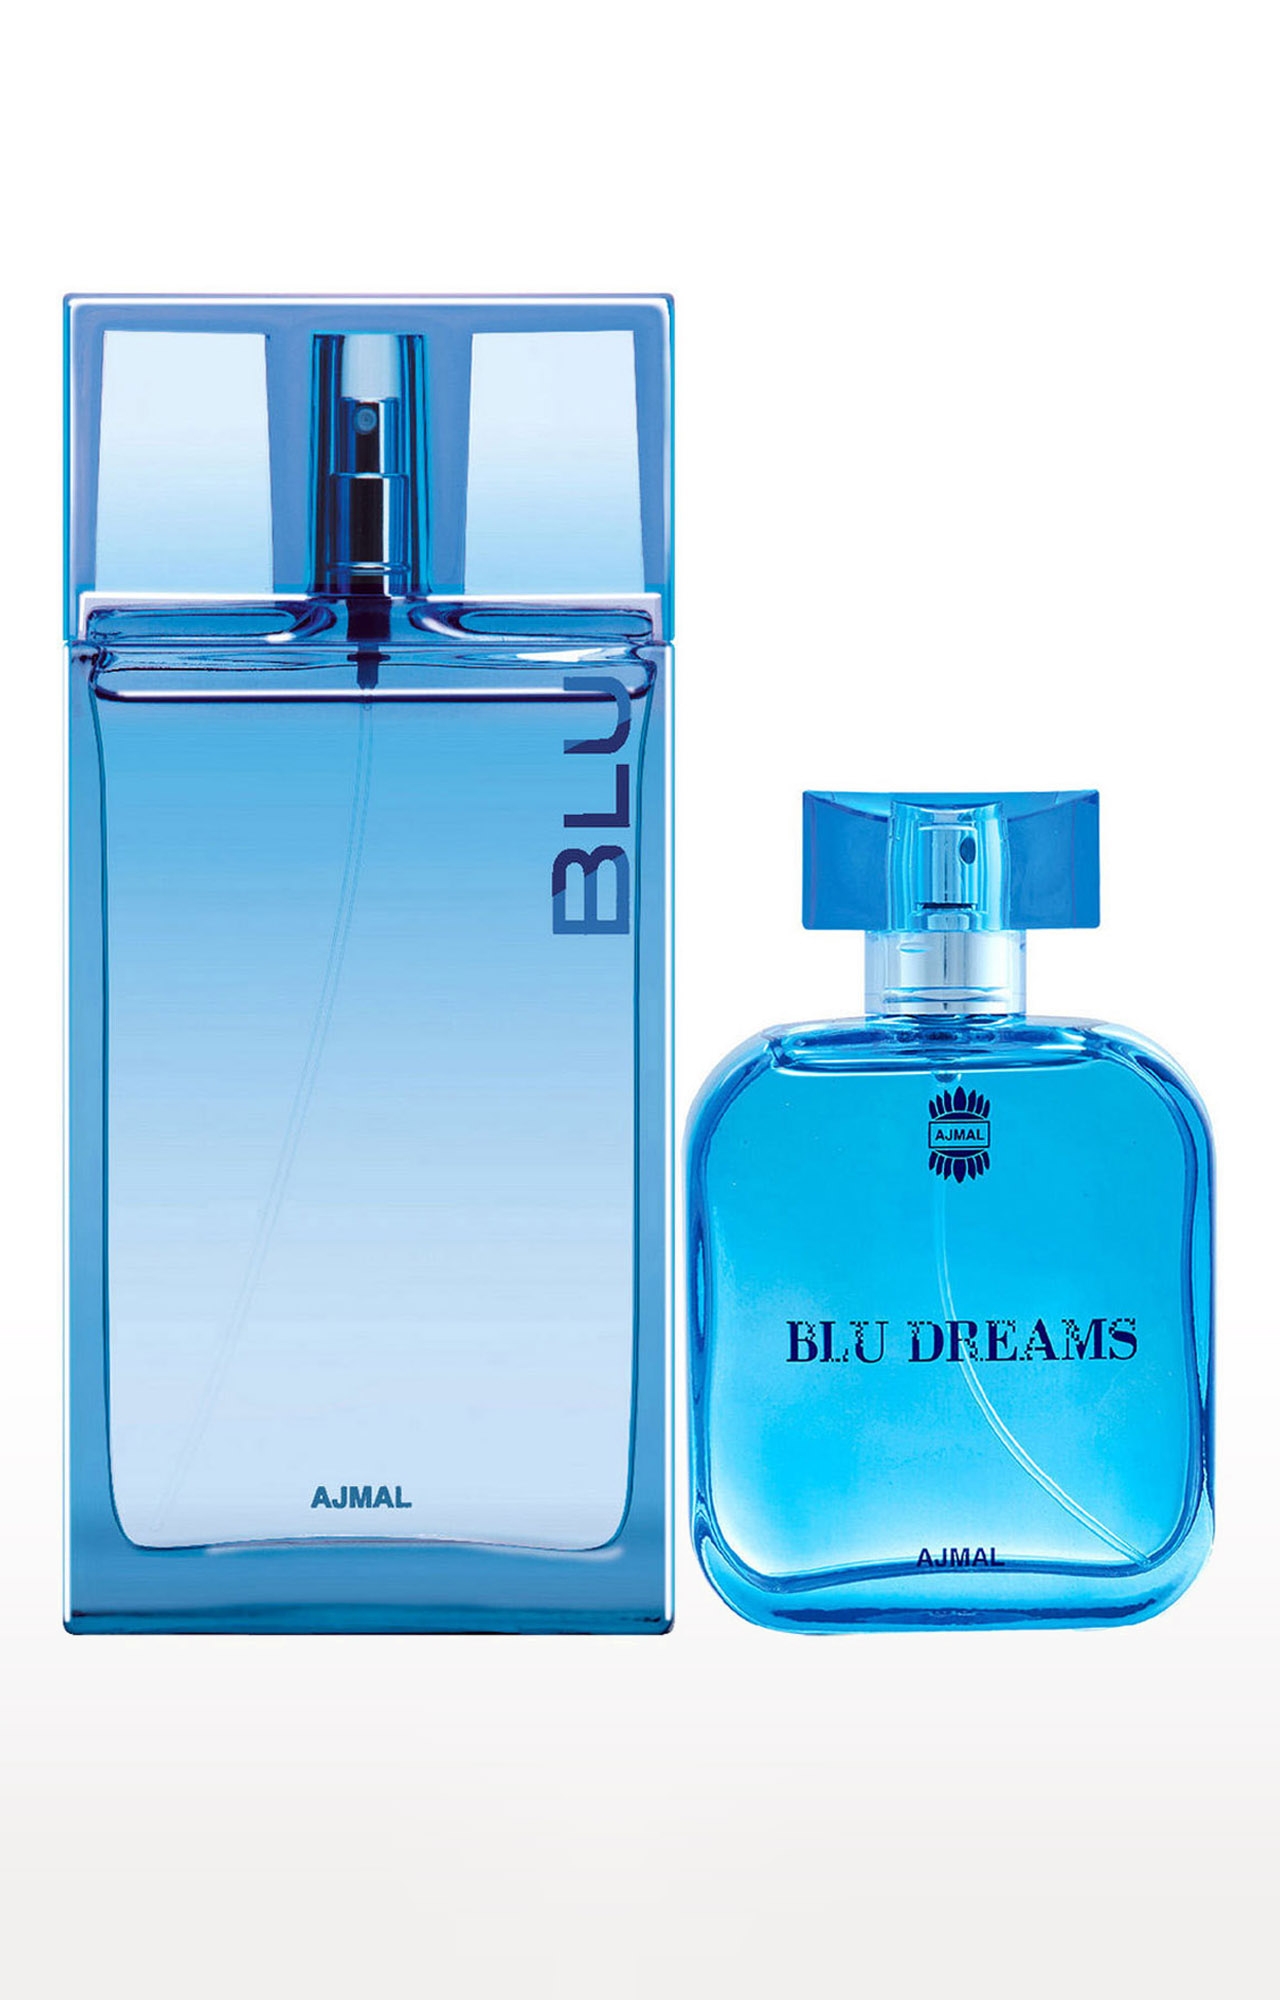 Ajmal Blu EDP Aquatic Perfume 90ml for Men and Blu Dreams EDP Citurs Fruity Perfume 100ml for Men FREE